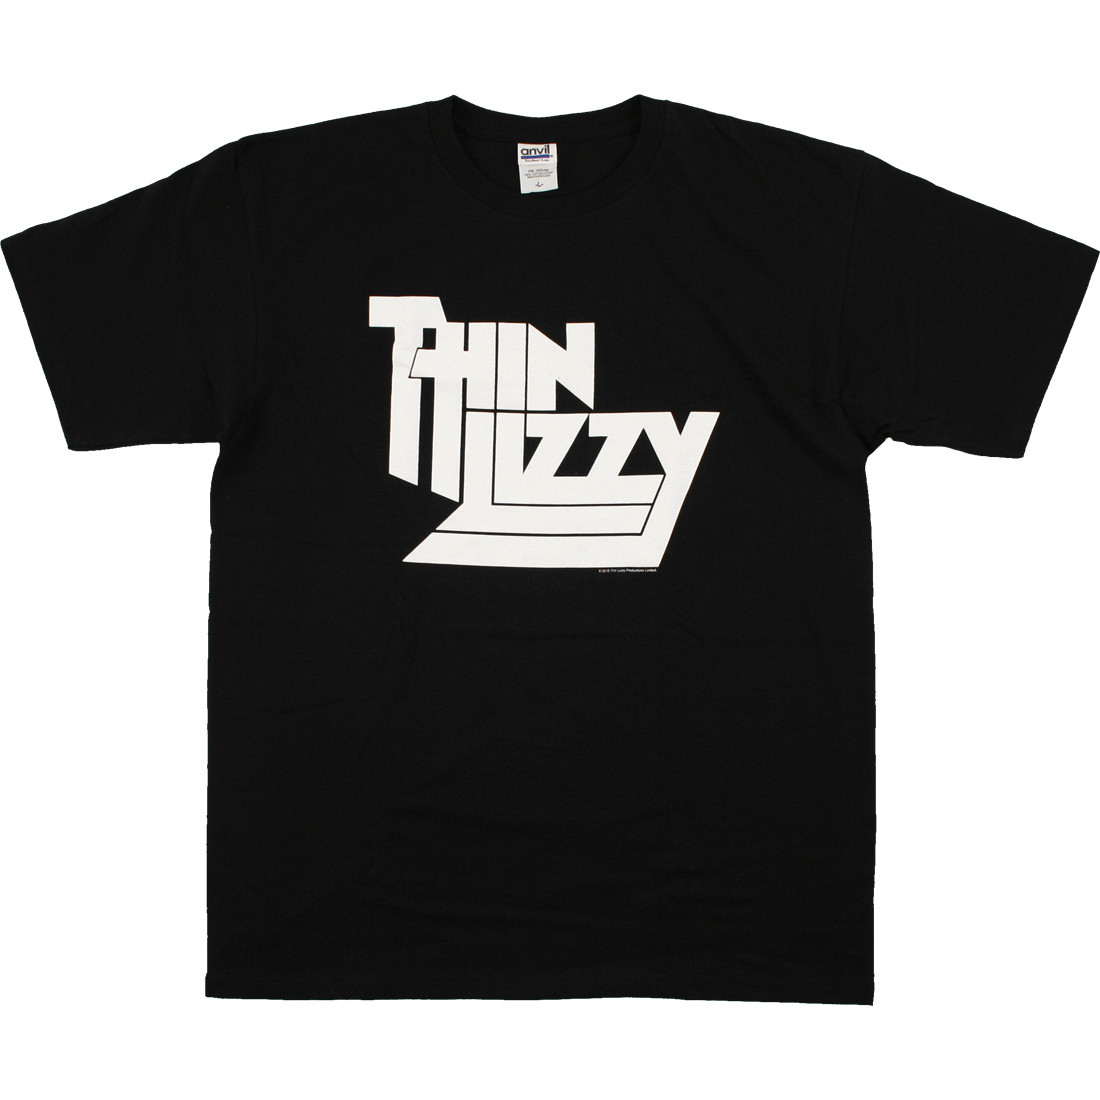 Thin Lizzy Logo Black T-Shirt Tee Liquid Blue